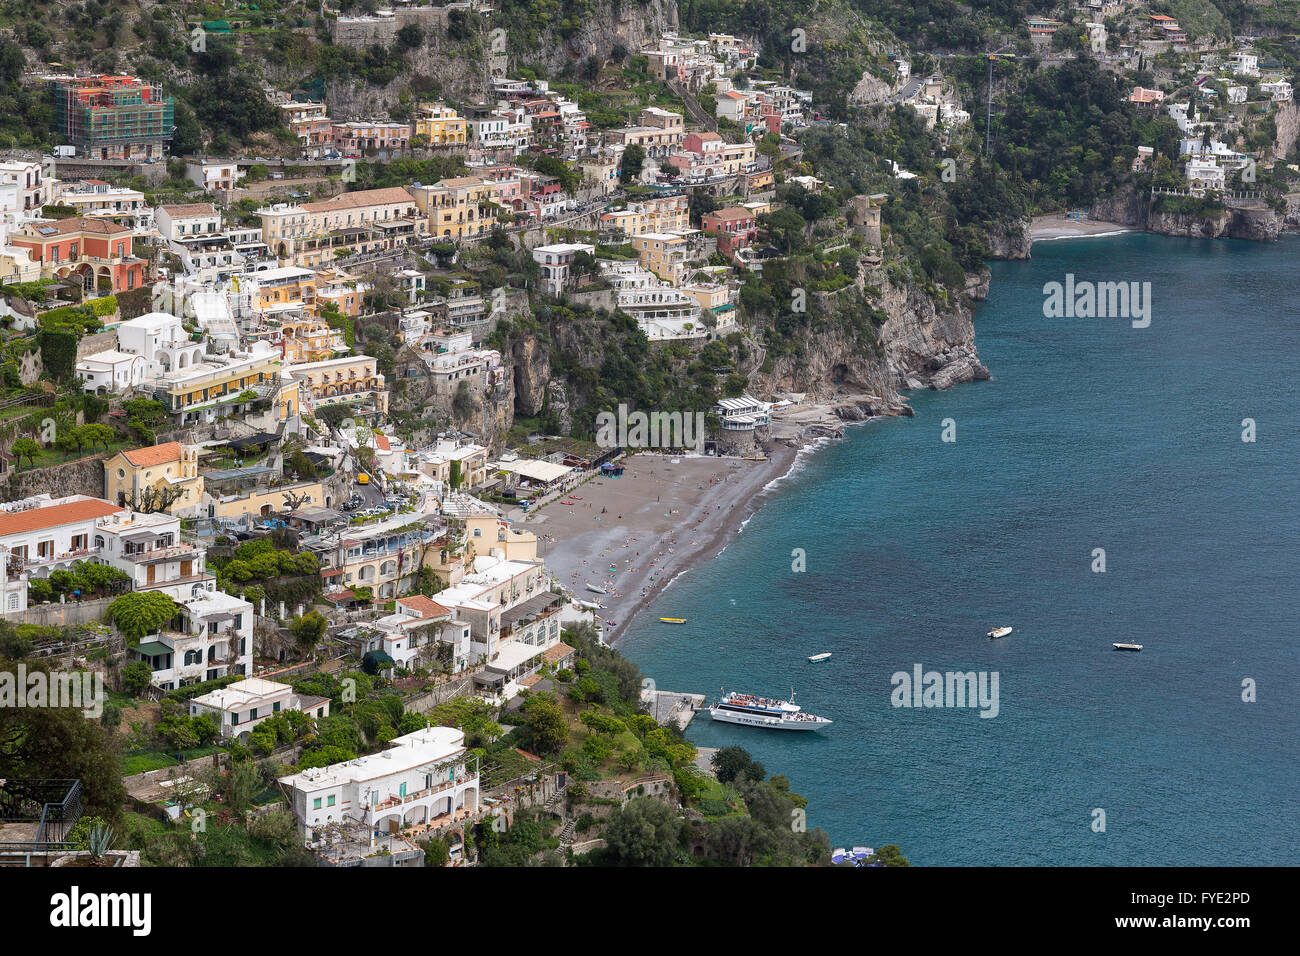 La localidad de Positano. La costa de Amalfi. Italia Foto de stock